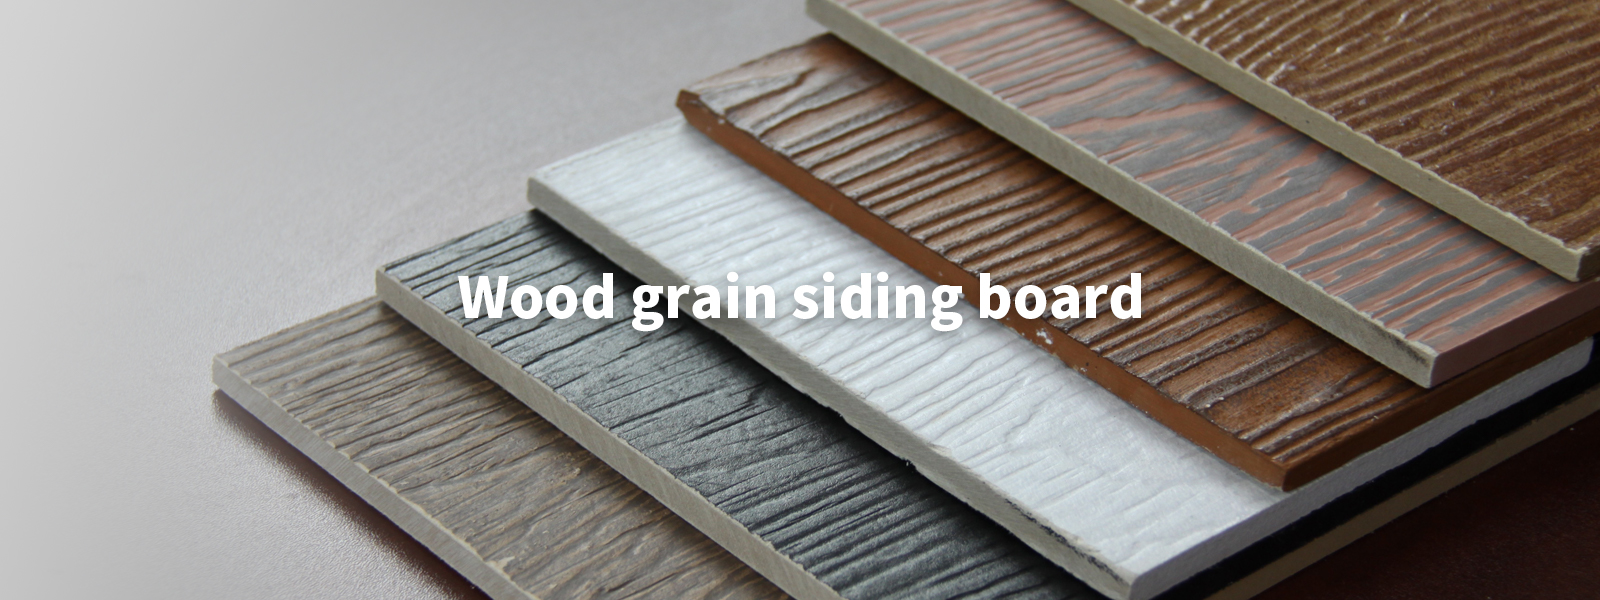 Wood grain siding board